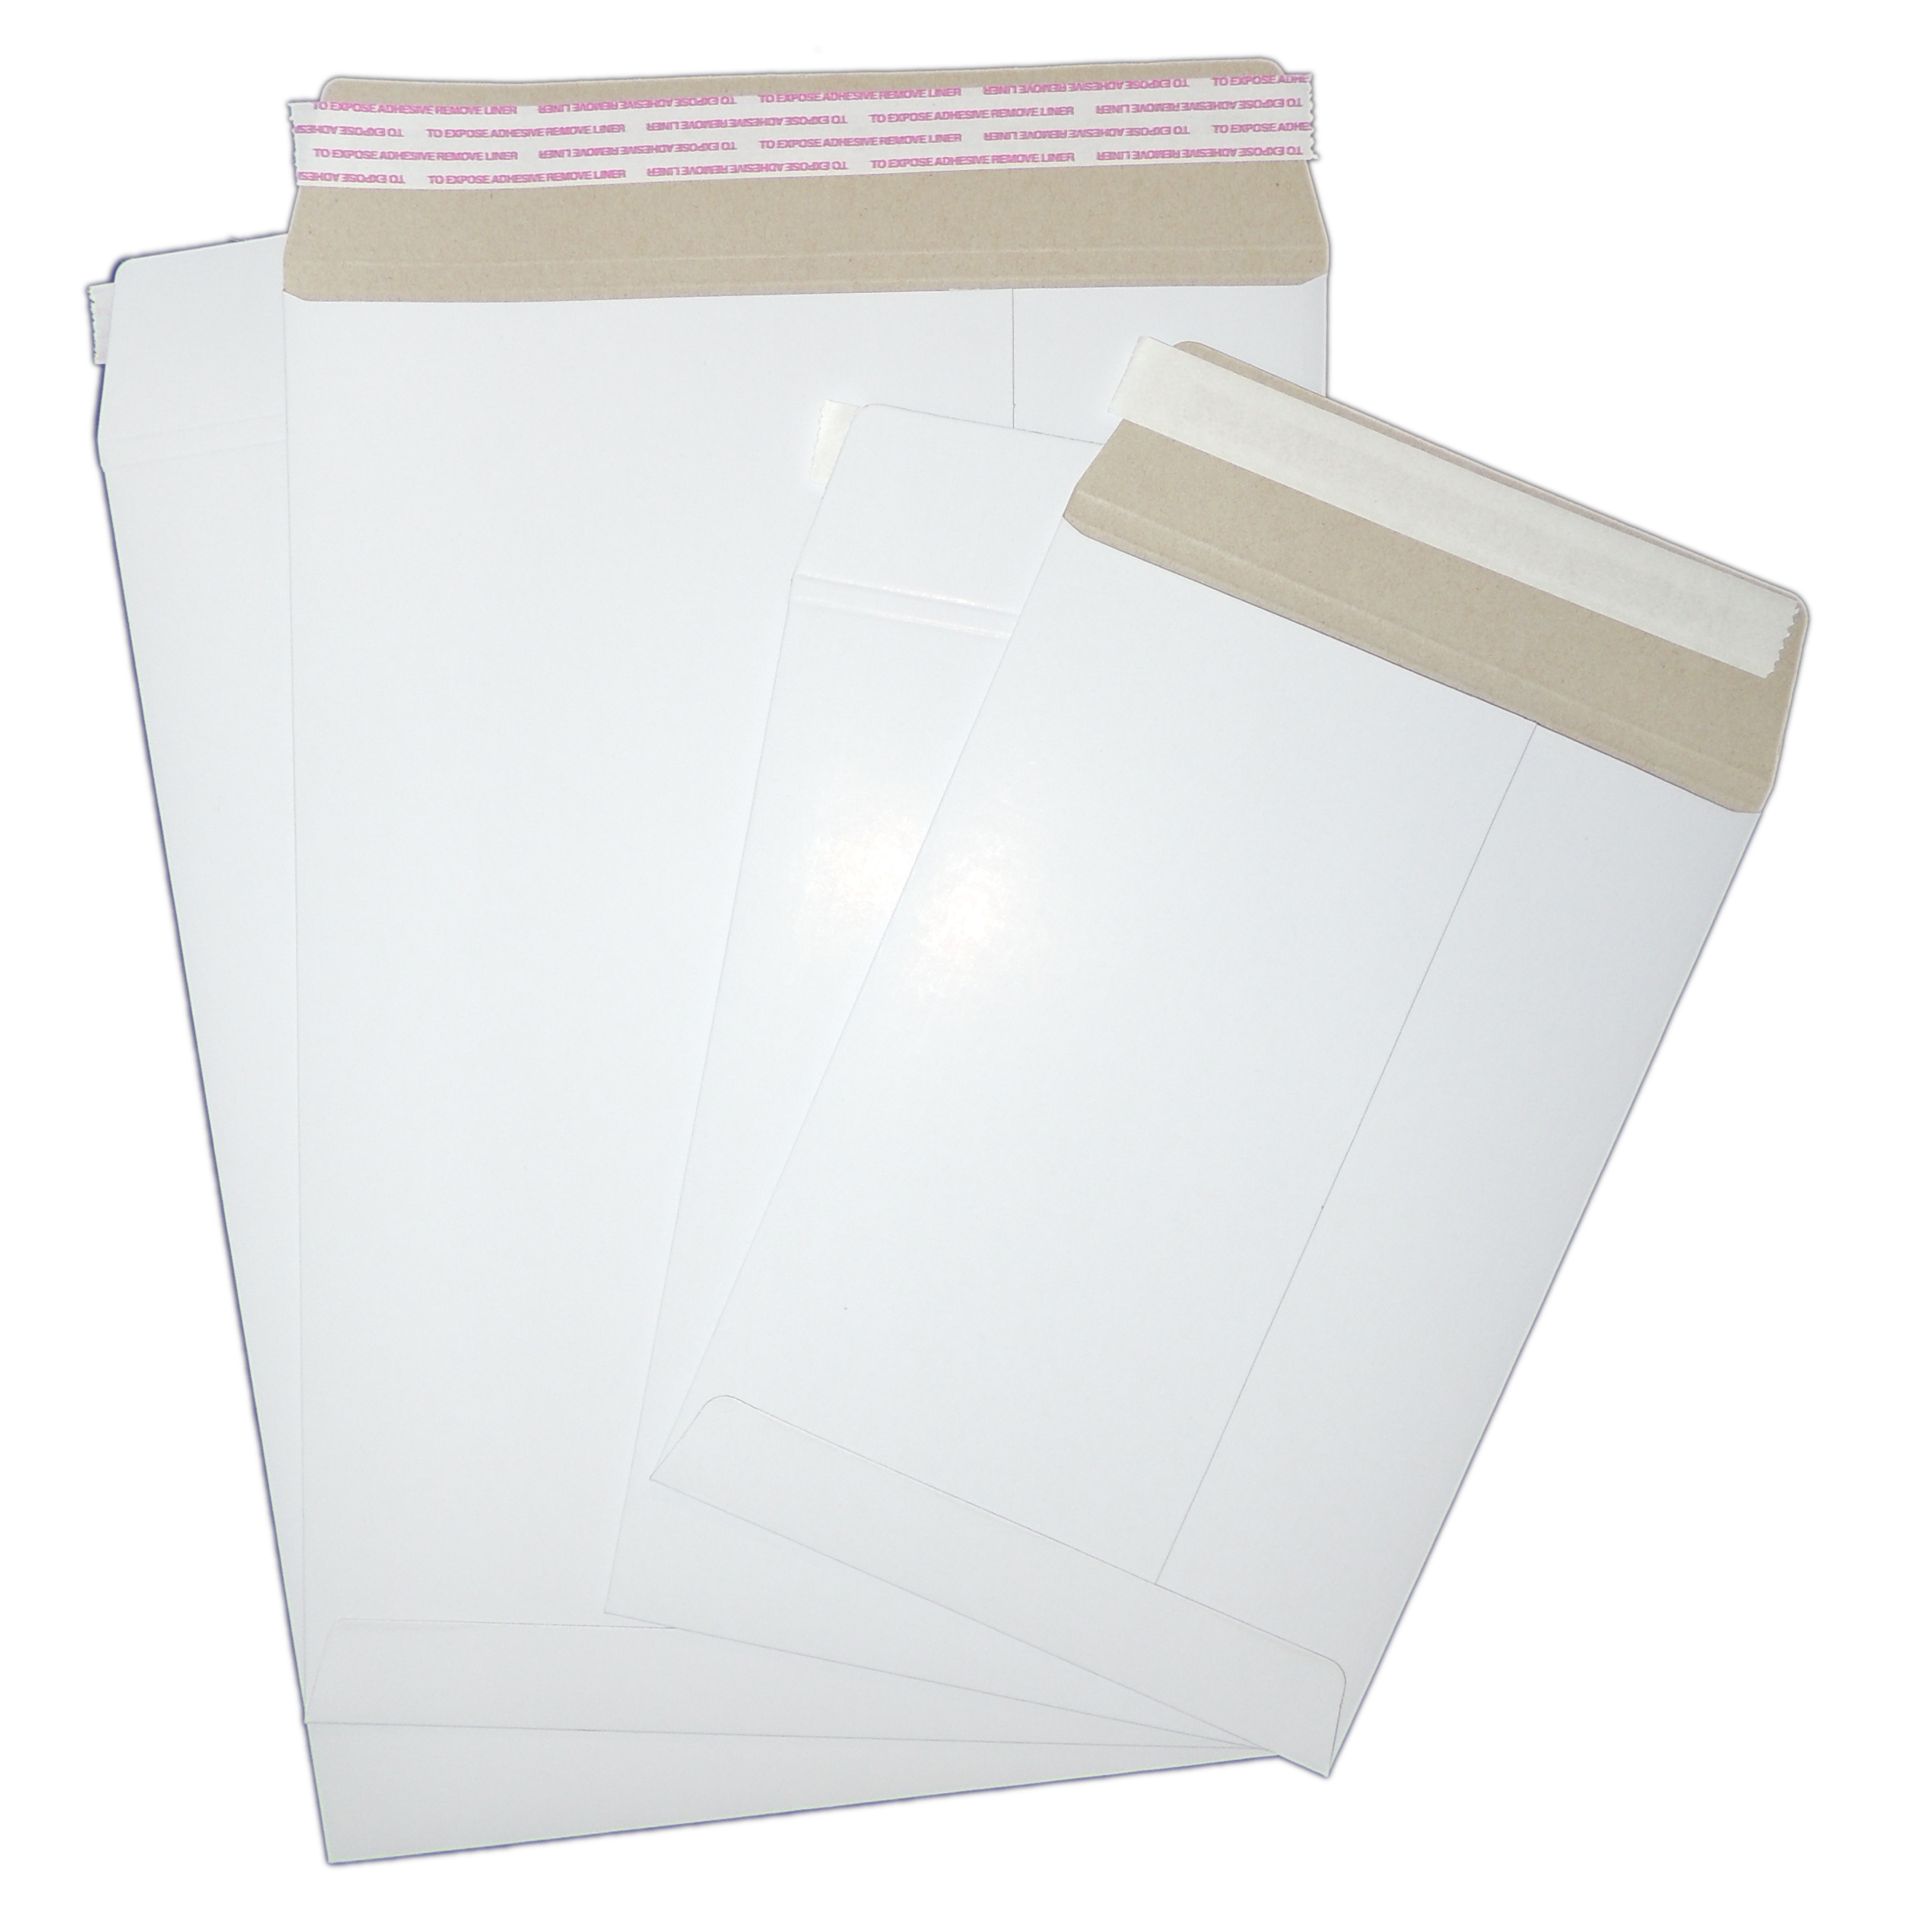 All Board Calendar Envelopes - Slim - 440mm x 170mm - White - Box of 100